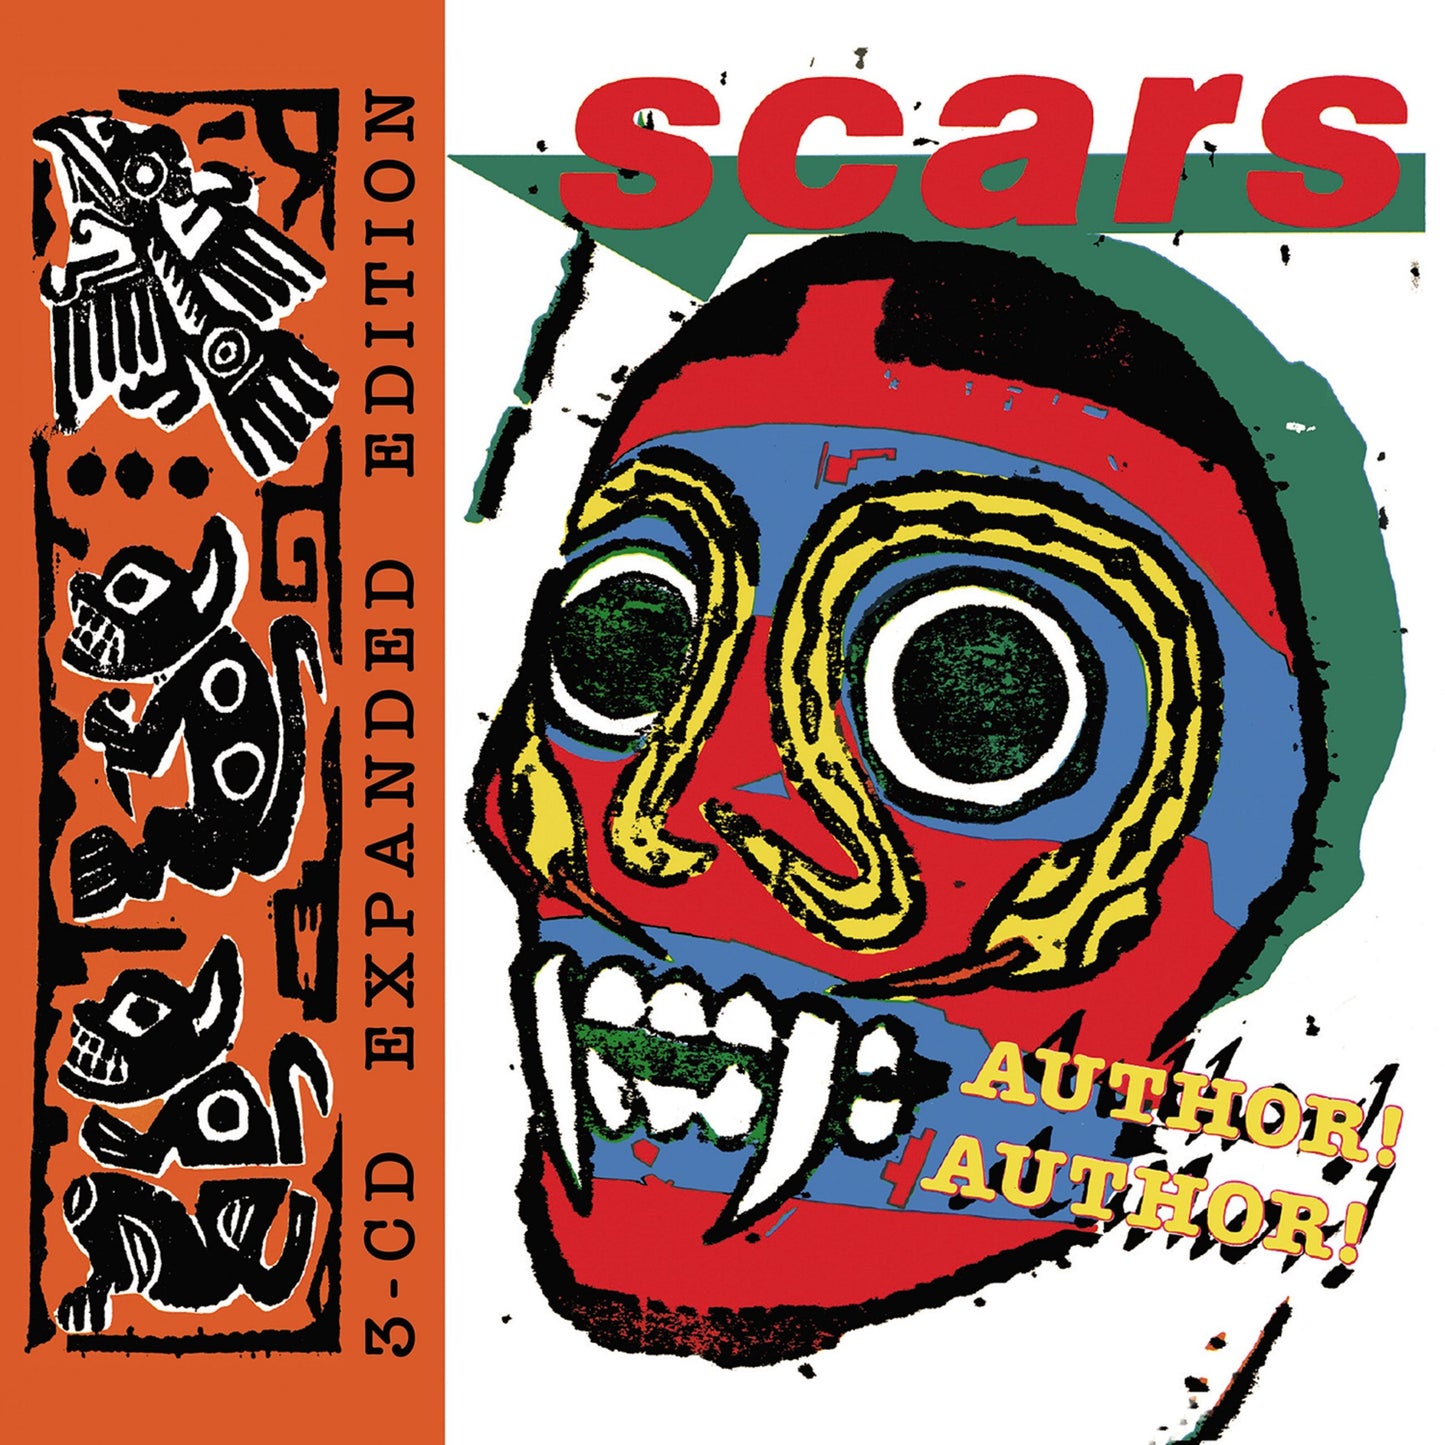 Scars - Author! Author! - 3CD